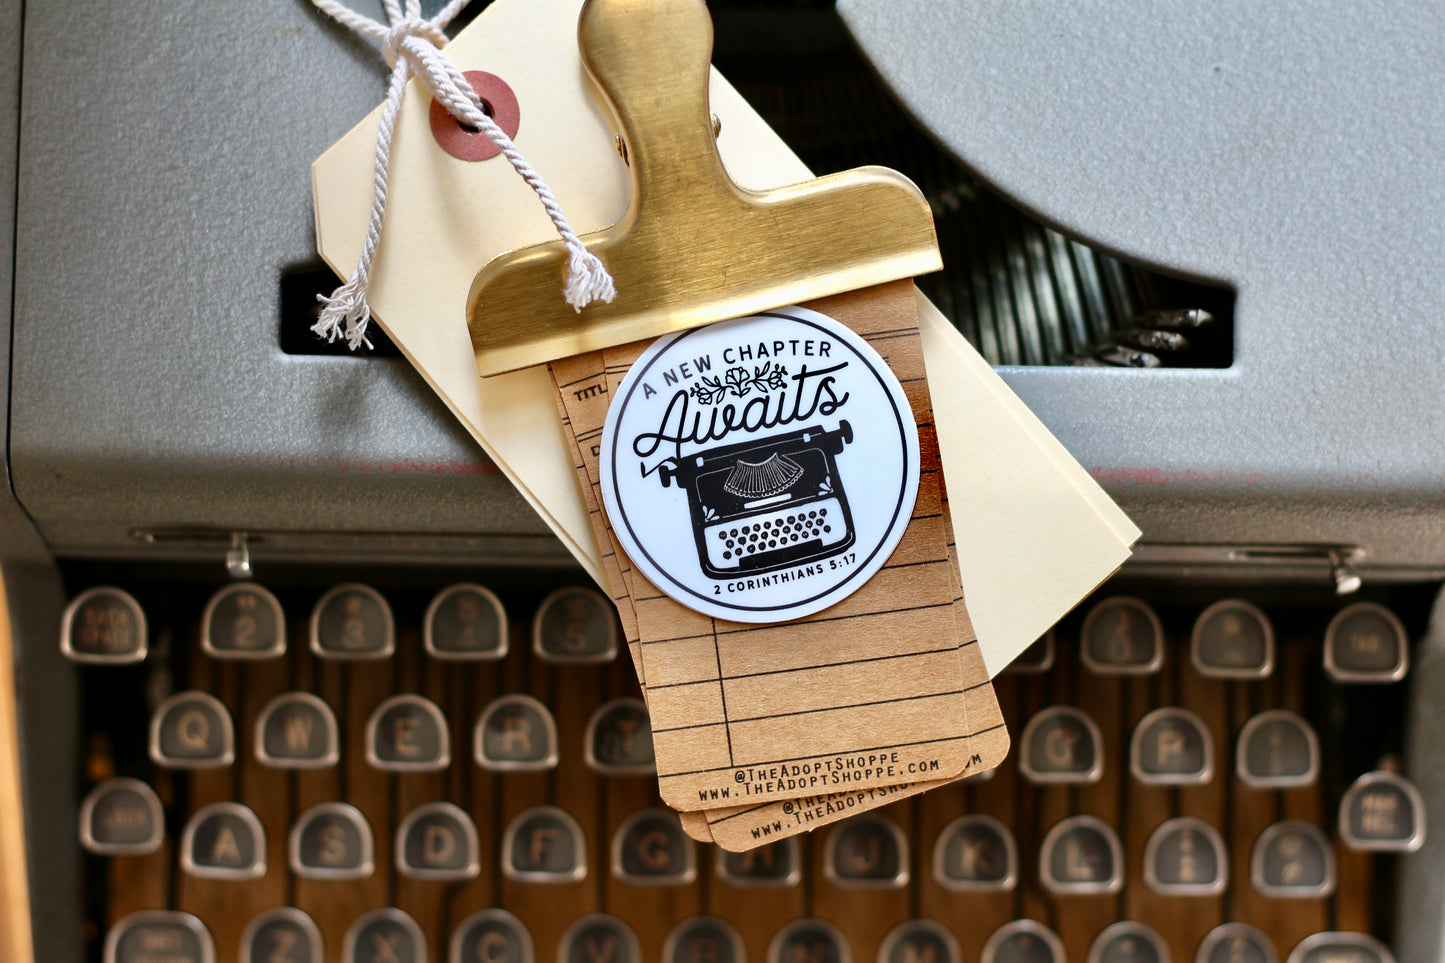 a new chapter awaits - typewriter (2 Corinthians 5:17) waterproof vinyl sticker decal